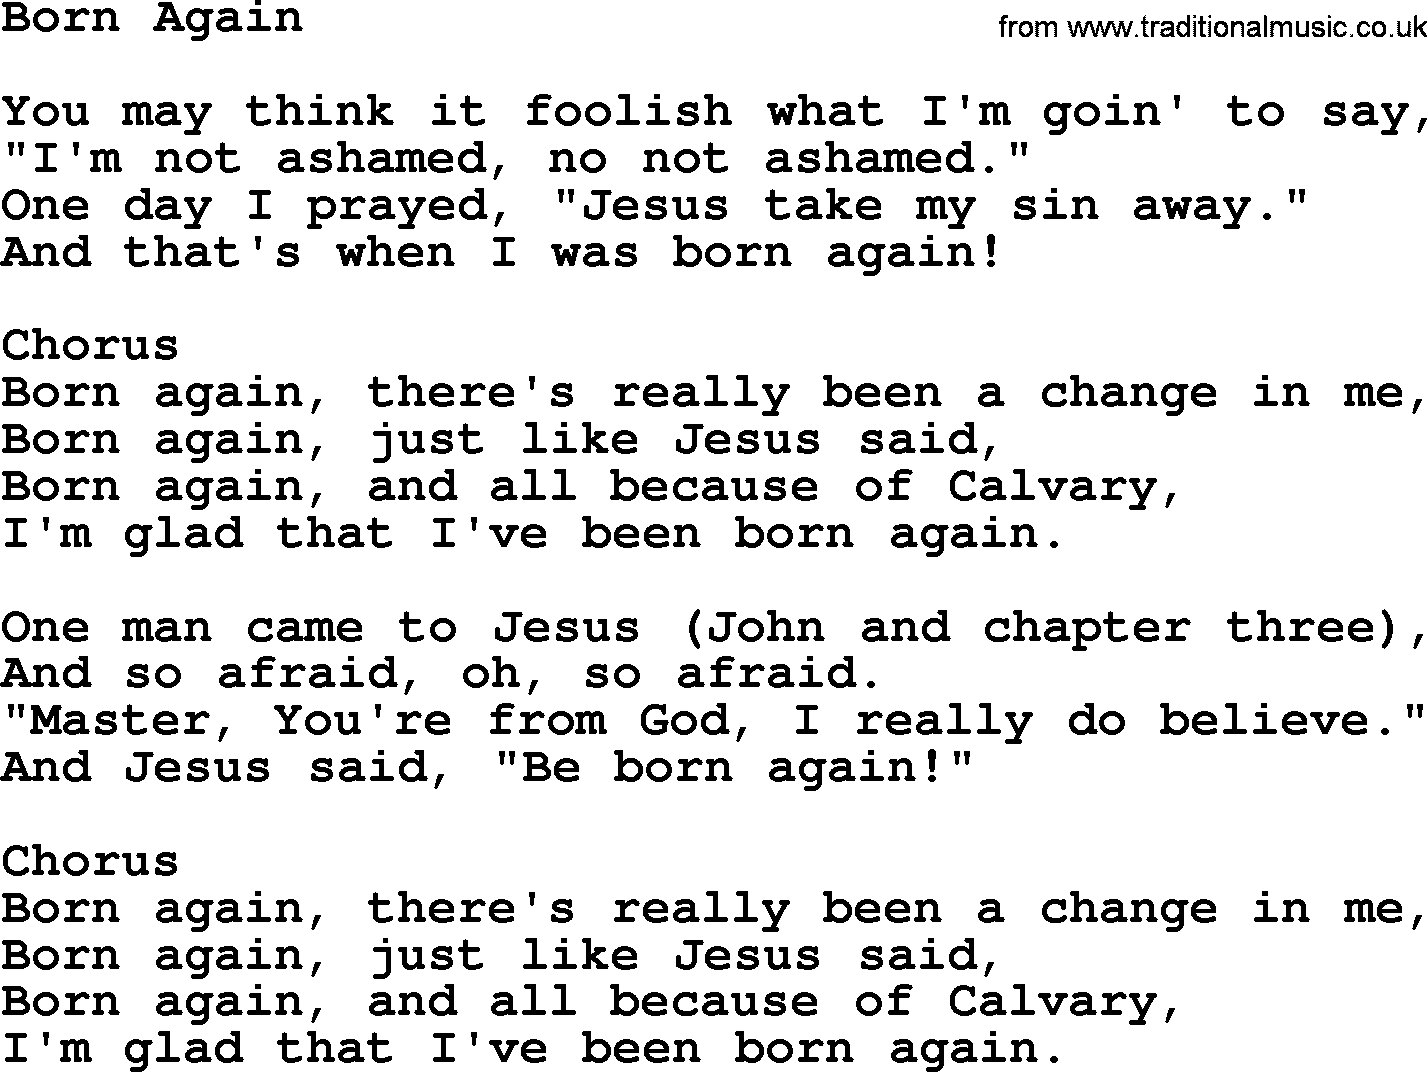 baptist-hymnal-christian-song-born-again-lyrics-with-pdf-for-printing